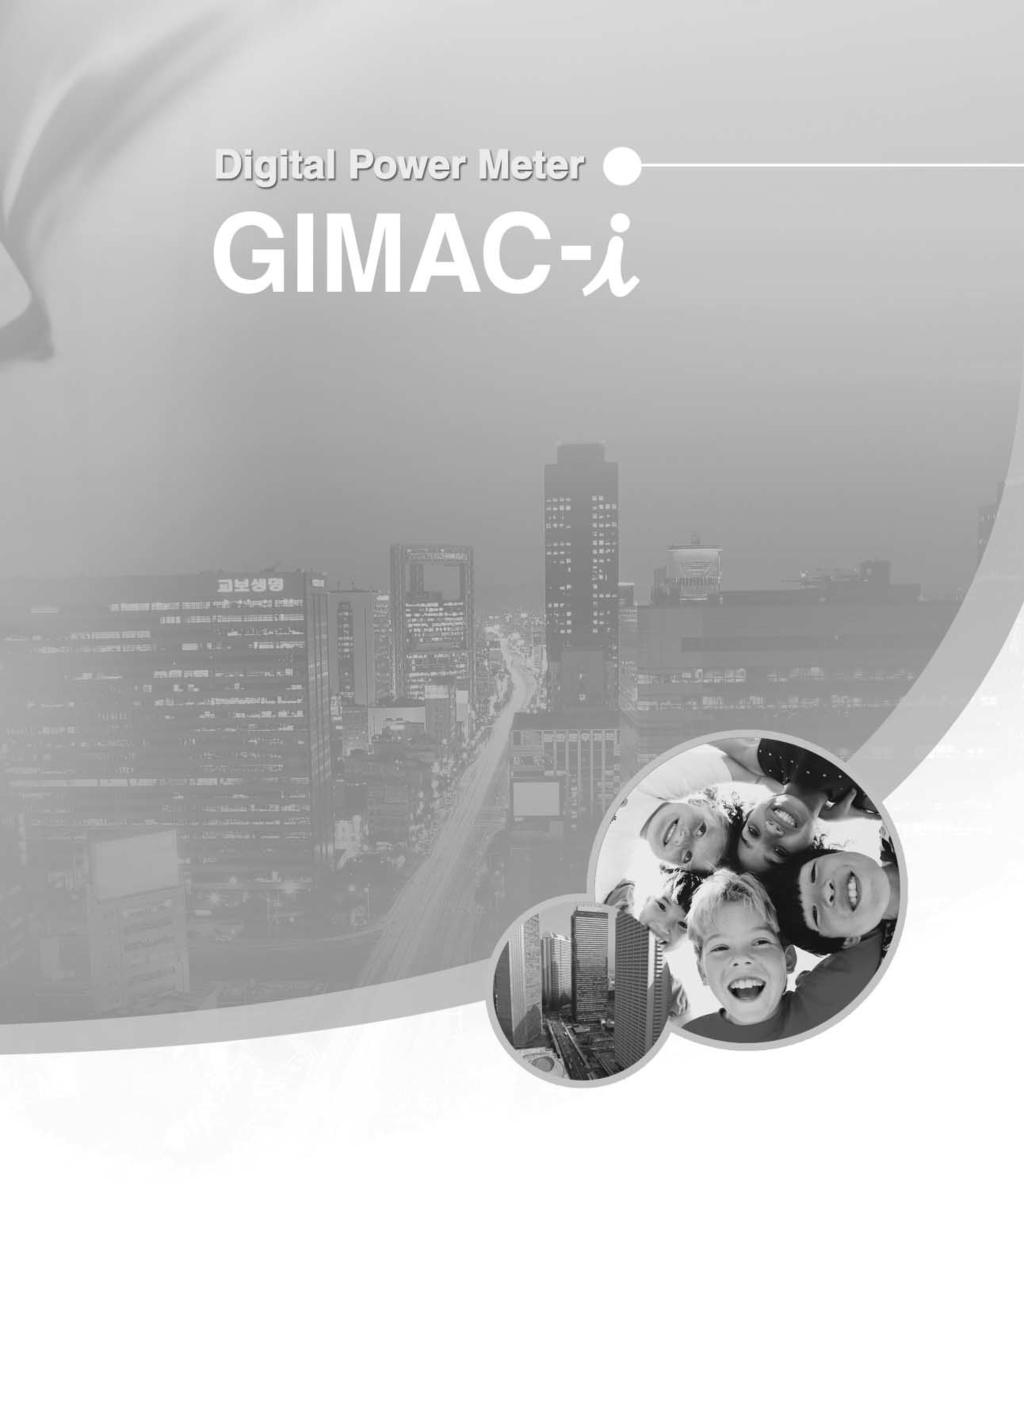 GIMAC-i 는수 / 배전계통의다양한전기량에대한고정밀계측및고조파, THD 측정등전력품질분석이가능한고급형 Digital Power Meter입니다.